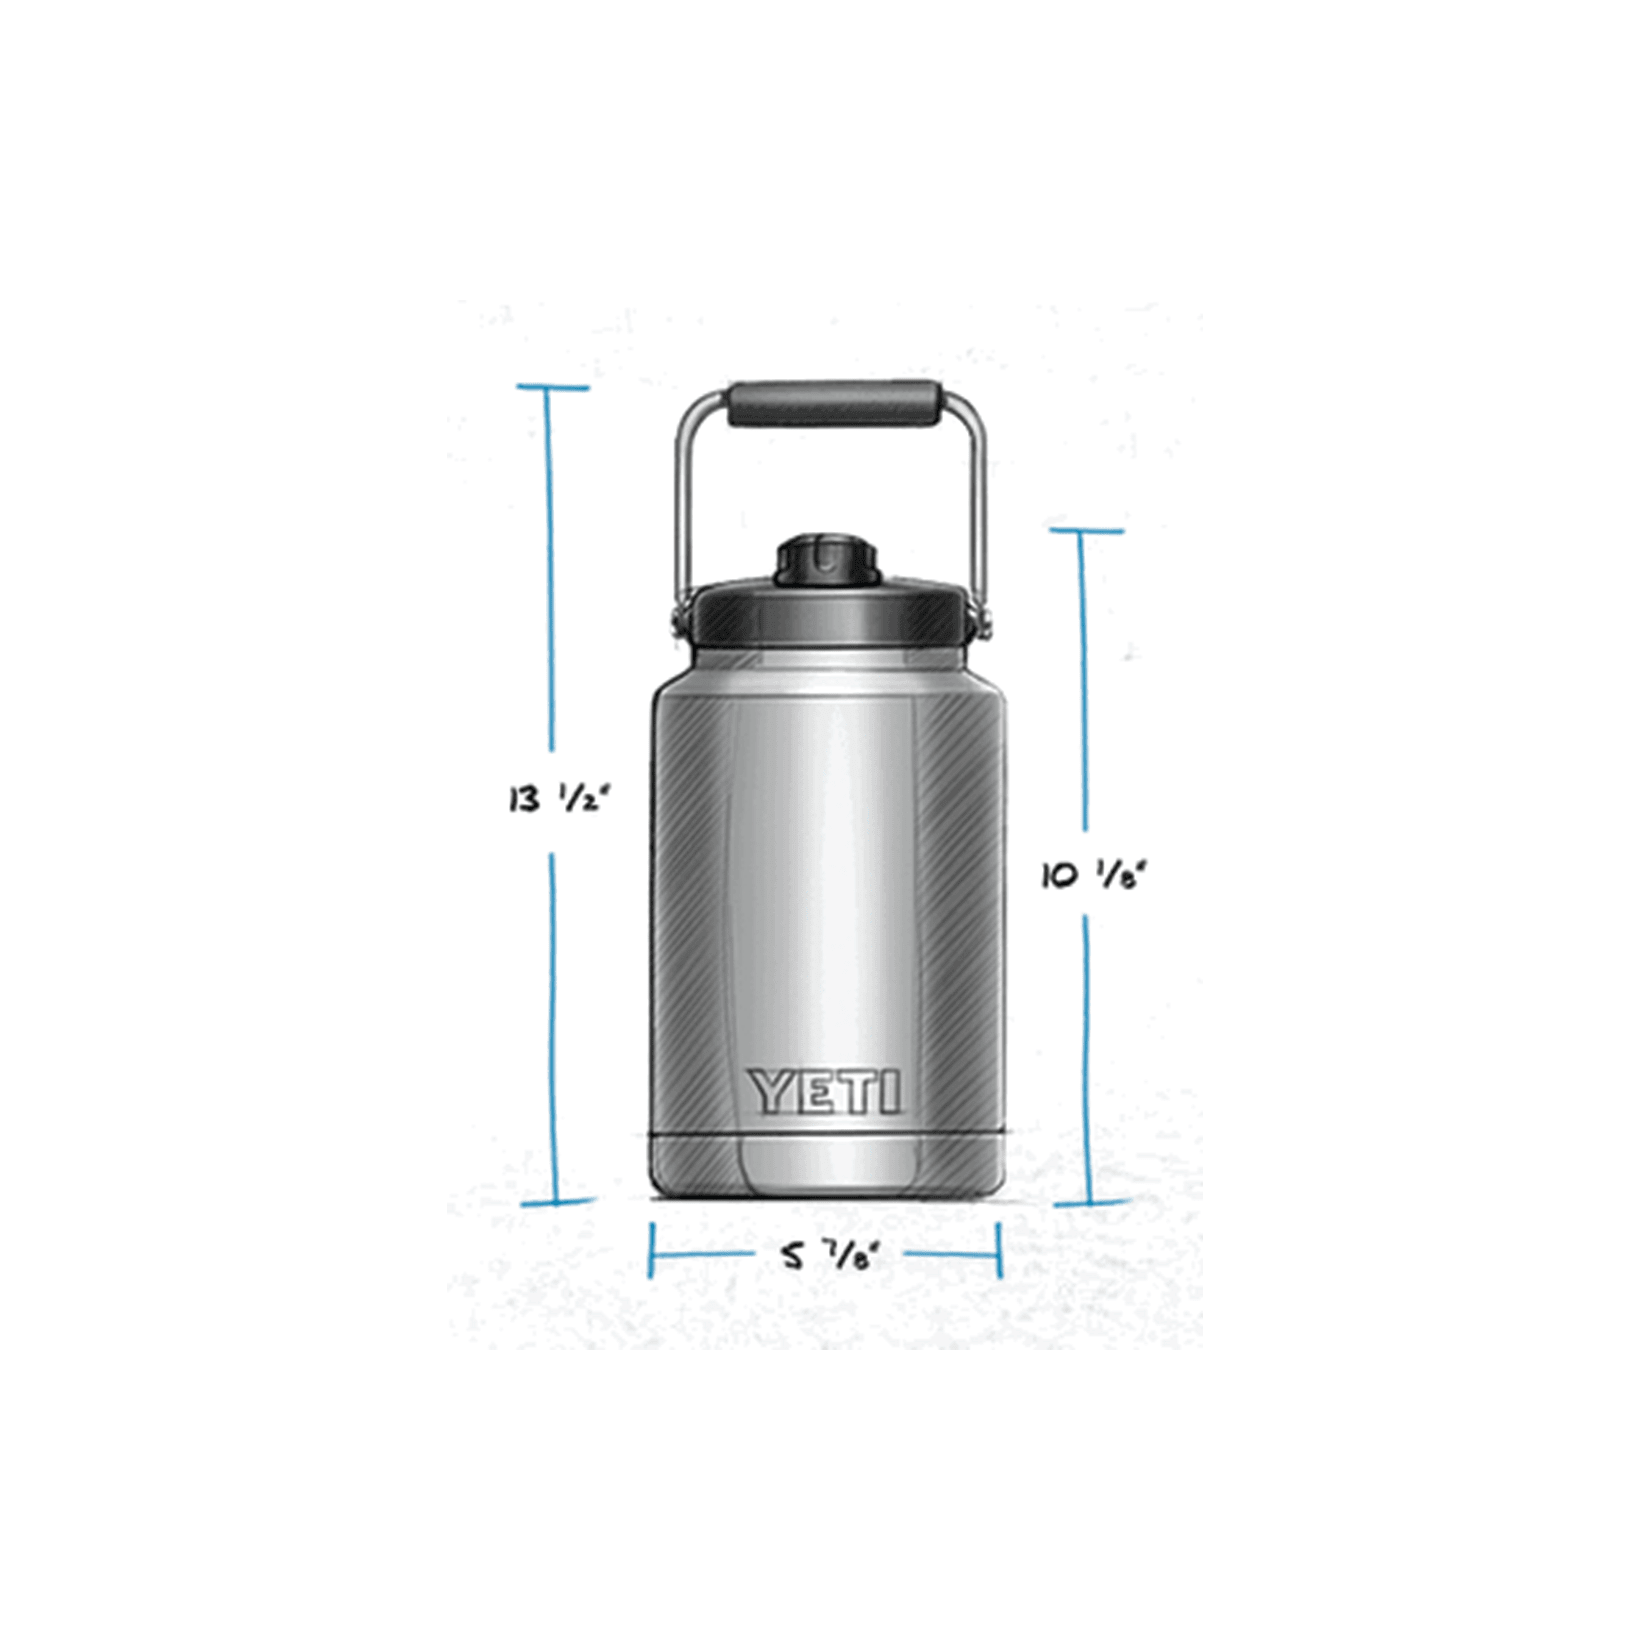 Rambler Half gal Jug - Coolers & Hydration, Yeti Coolers